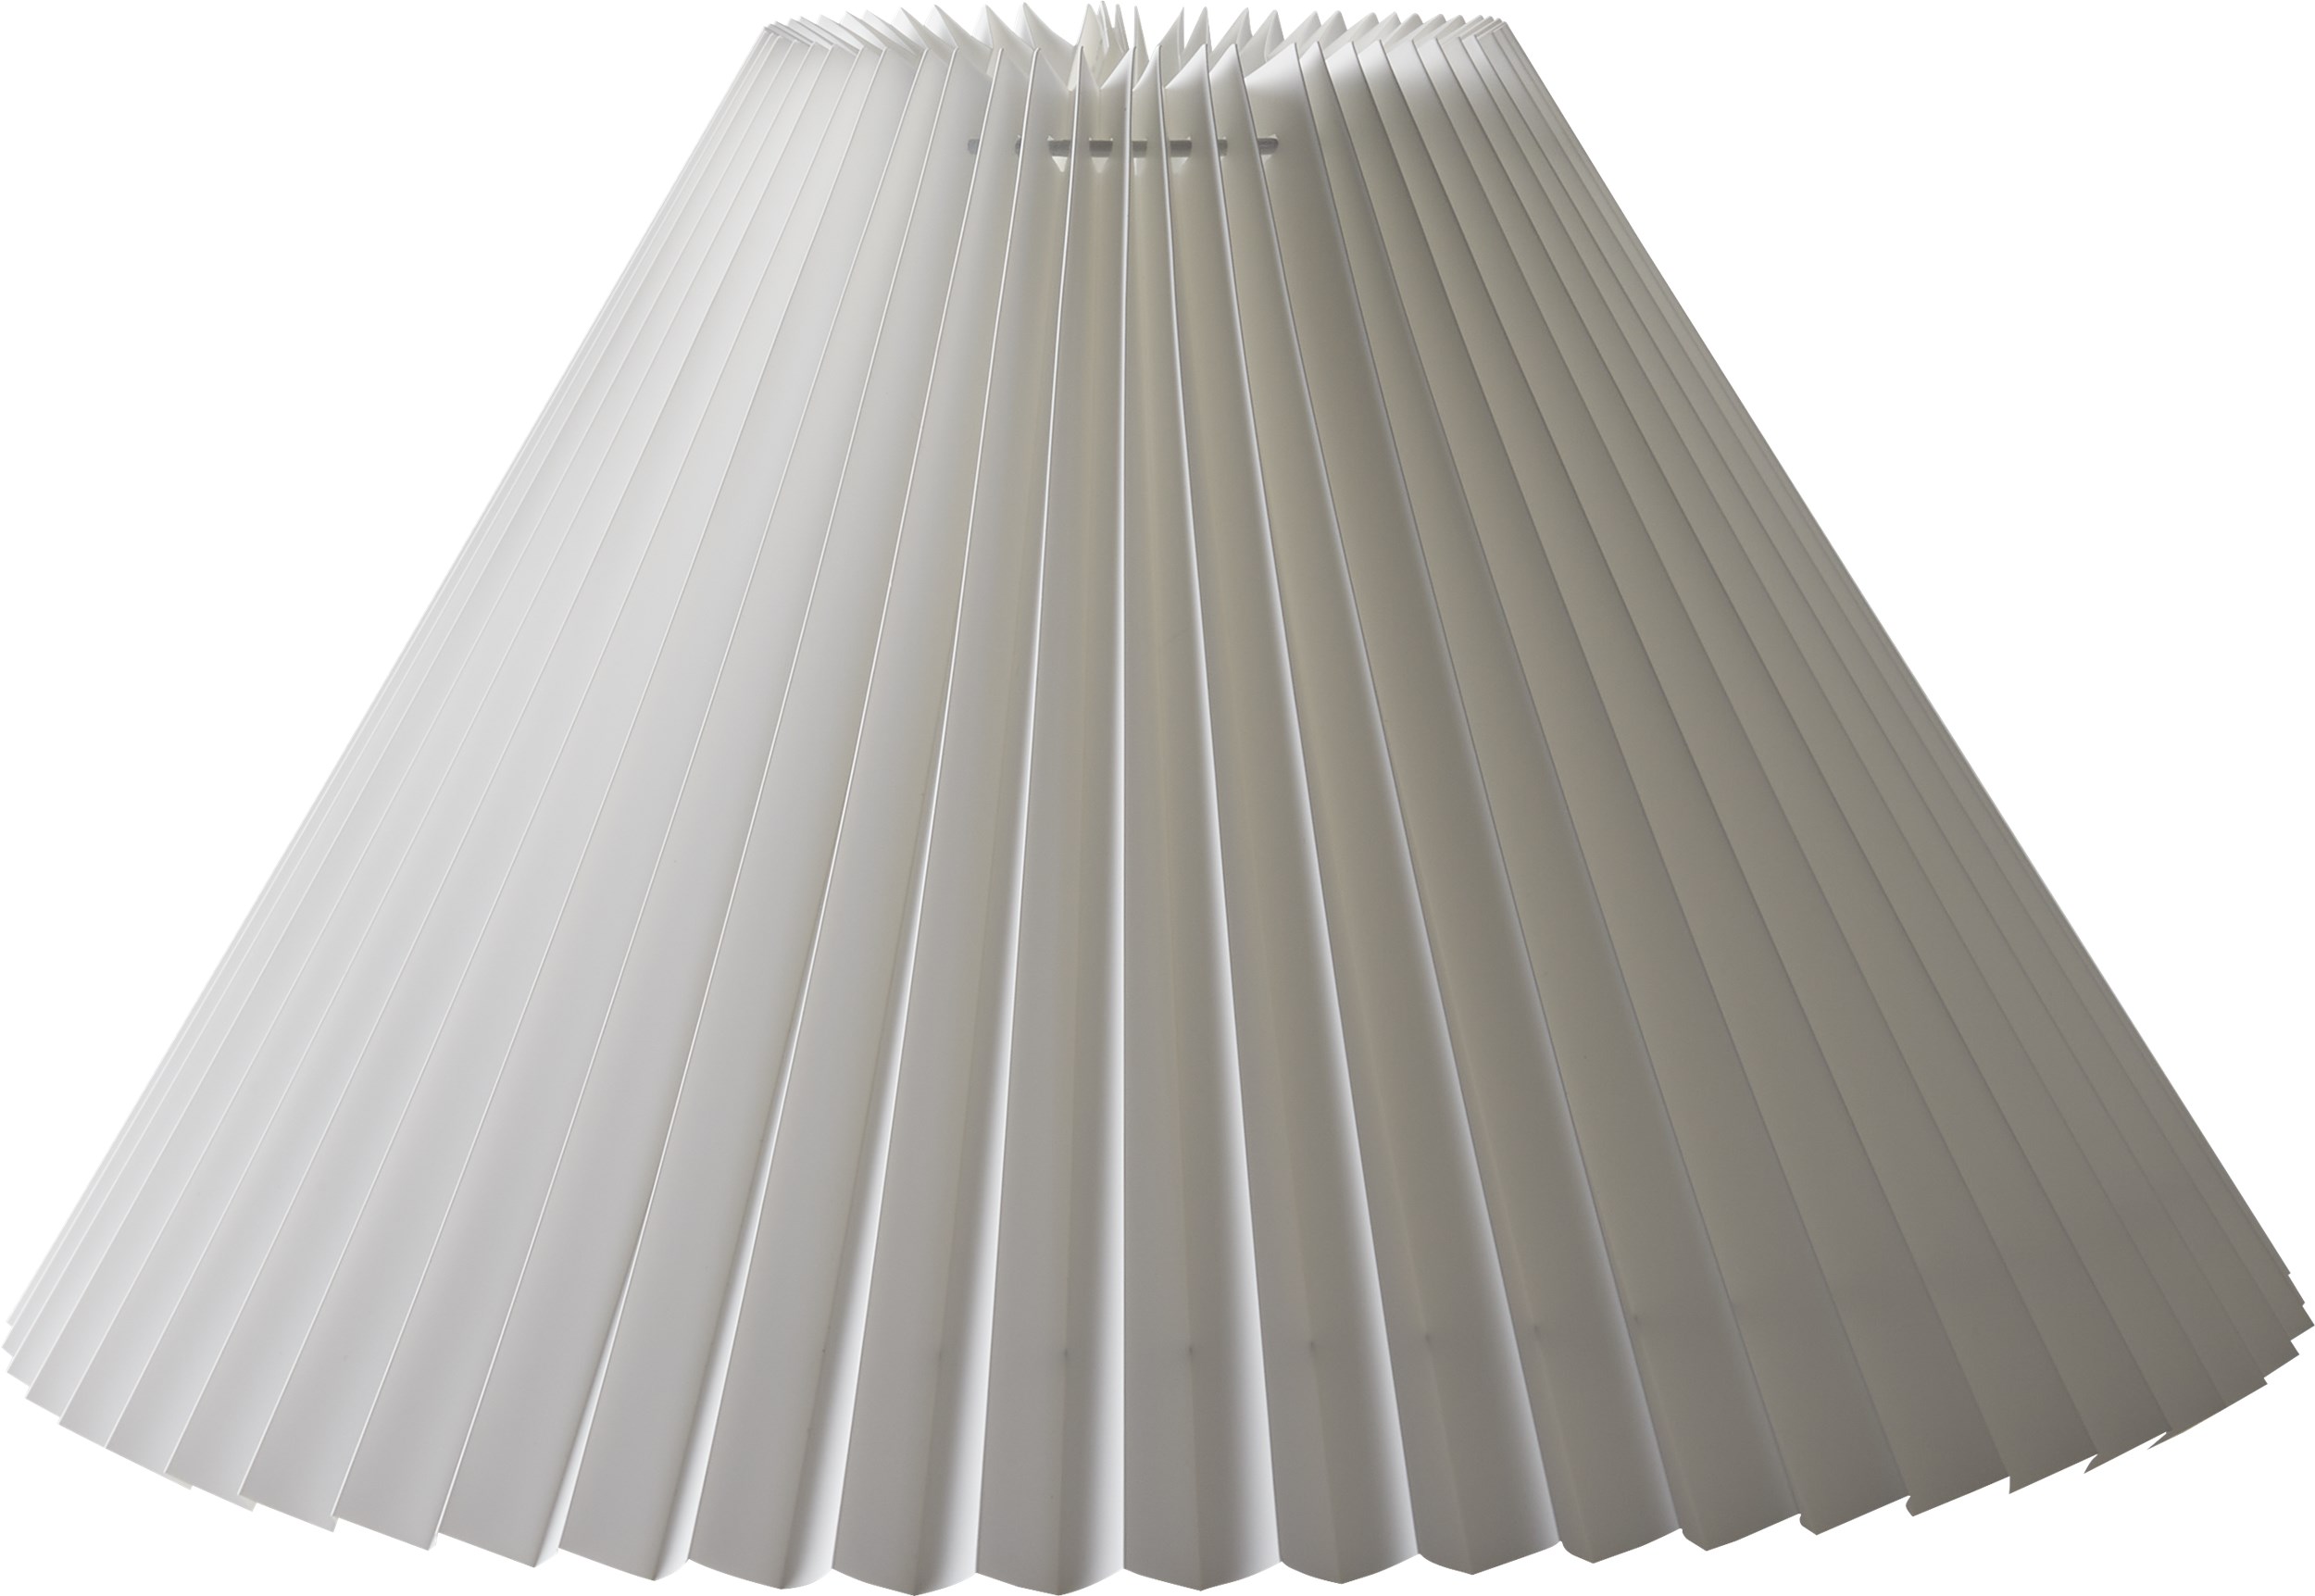 Solo Lampskärm 21,5 x 35,5 cm - Vitt tyg plisséskärm och innerskärm i vit folie